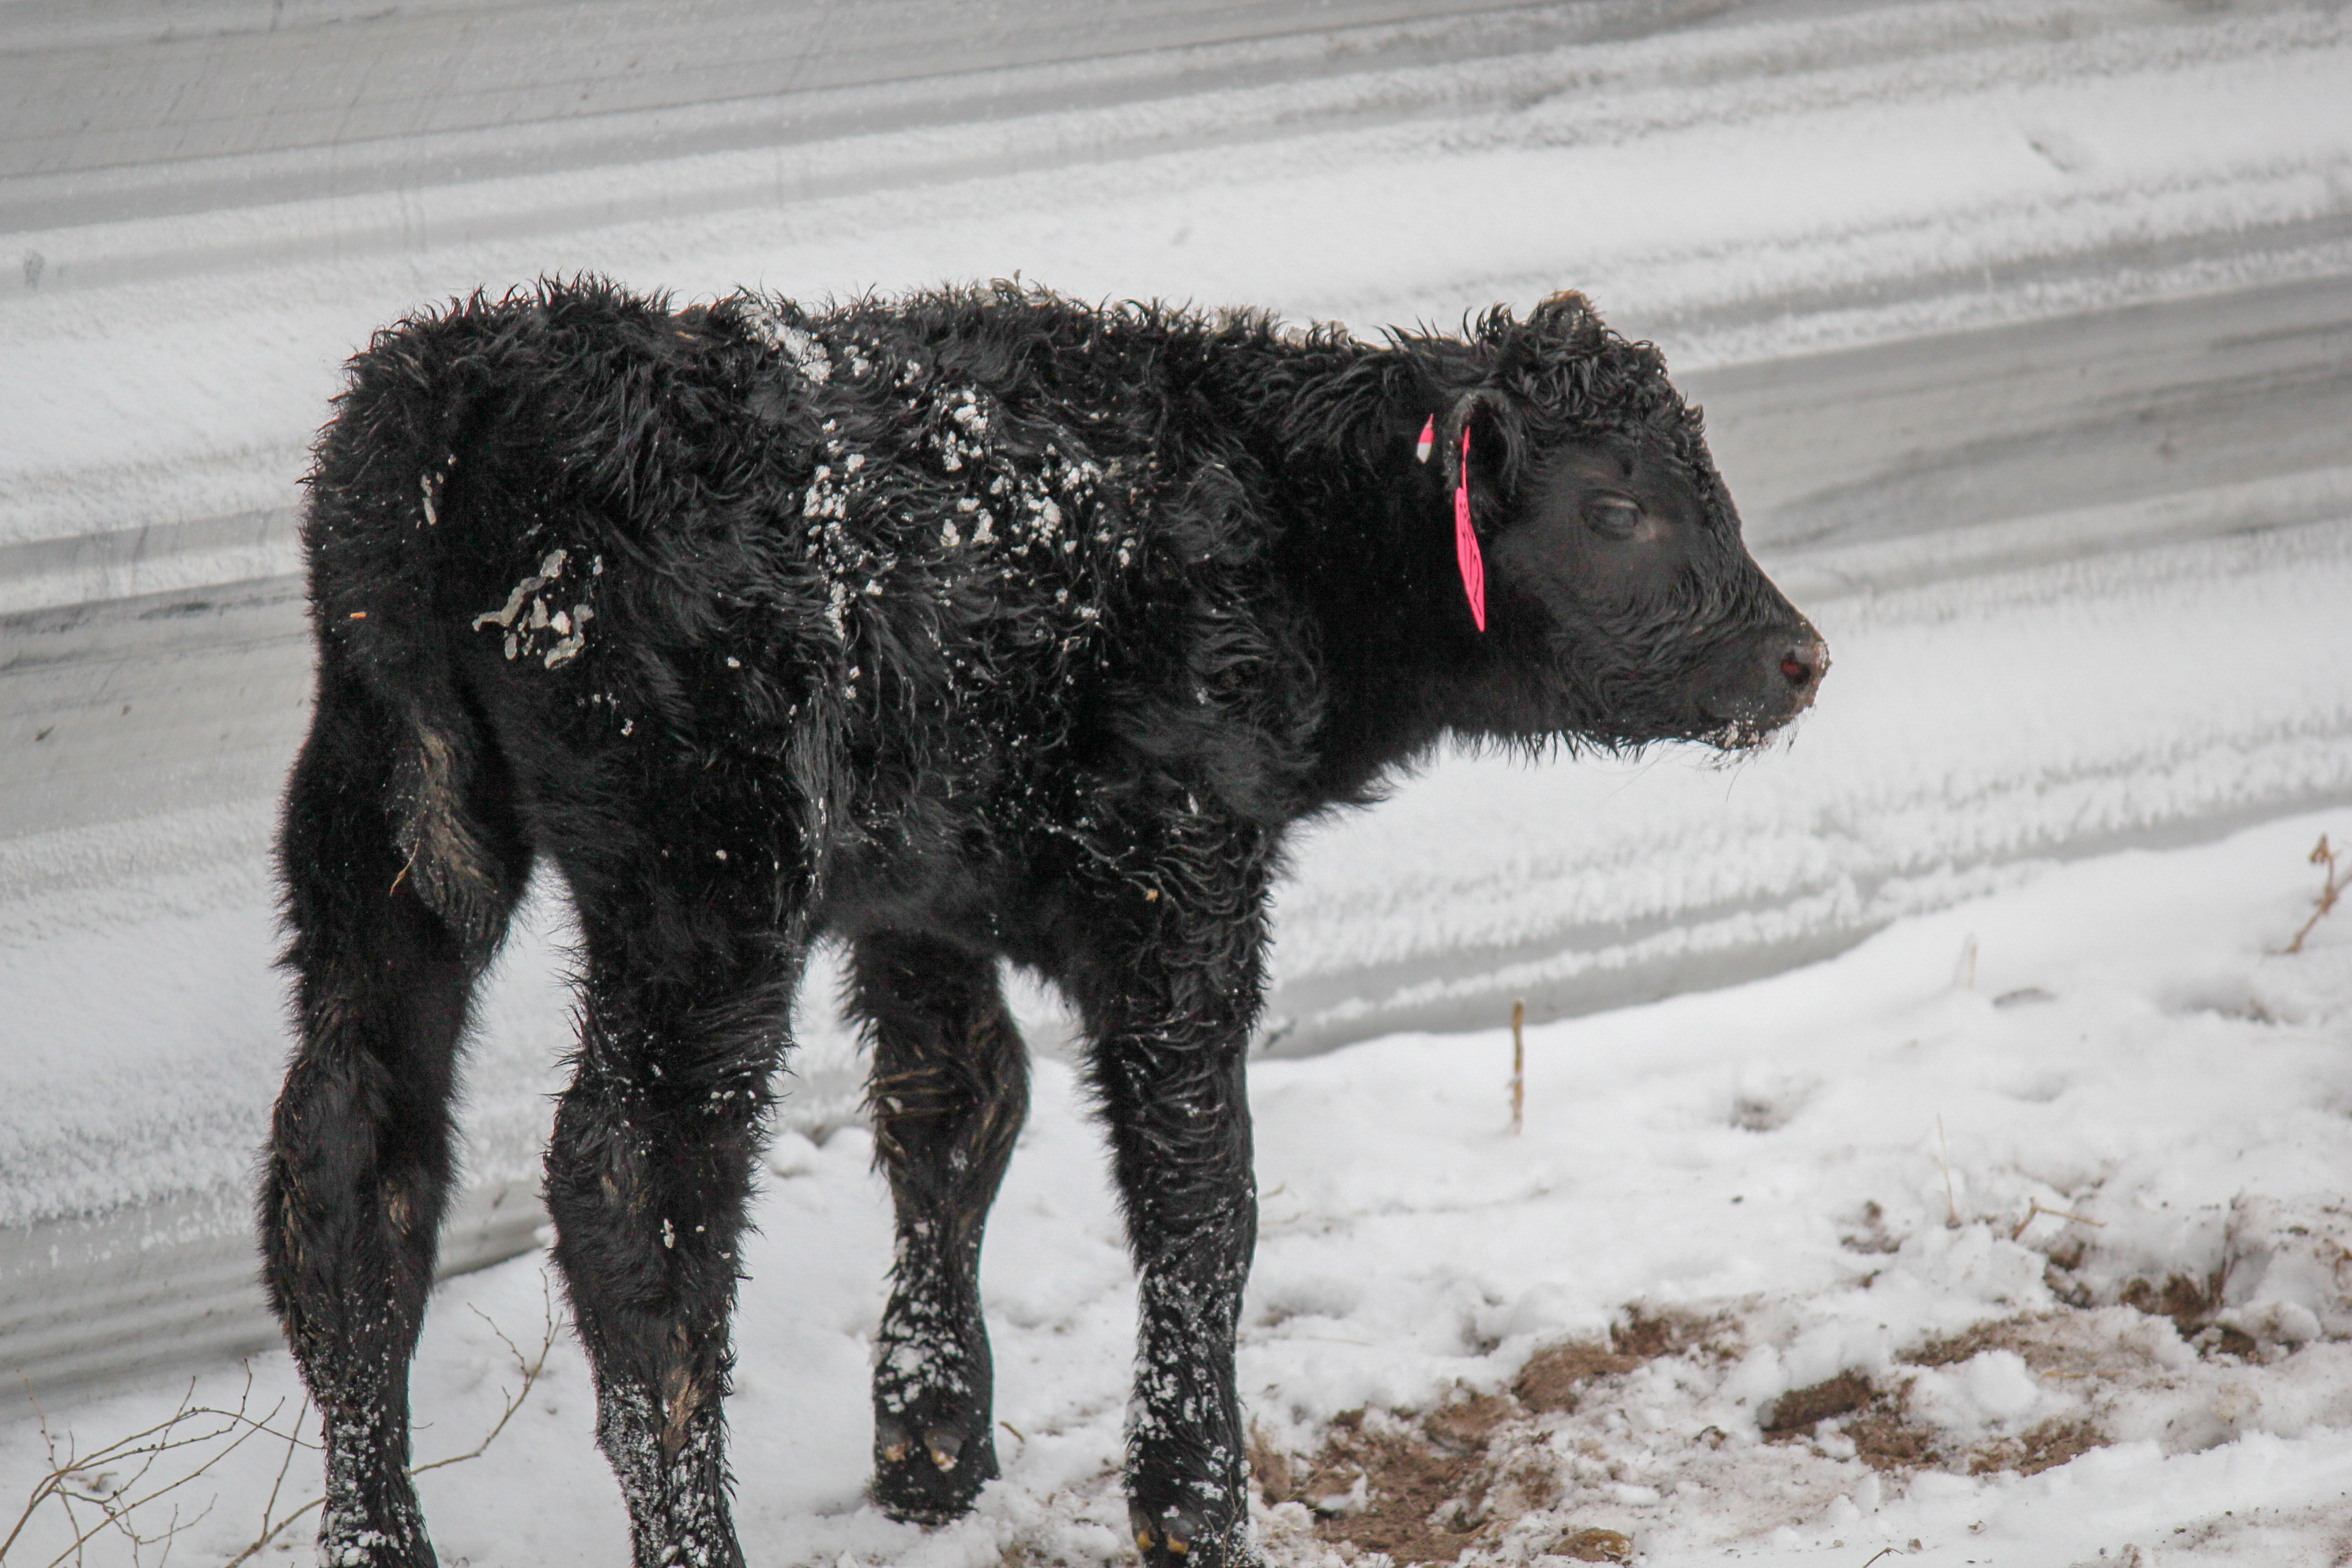 calf in the snow